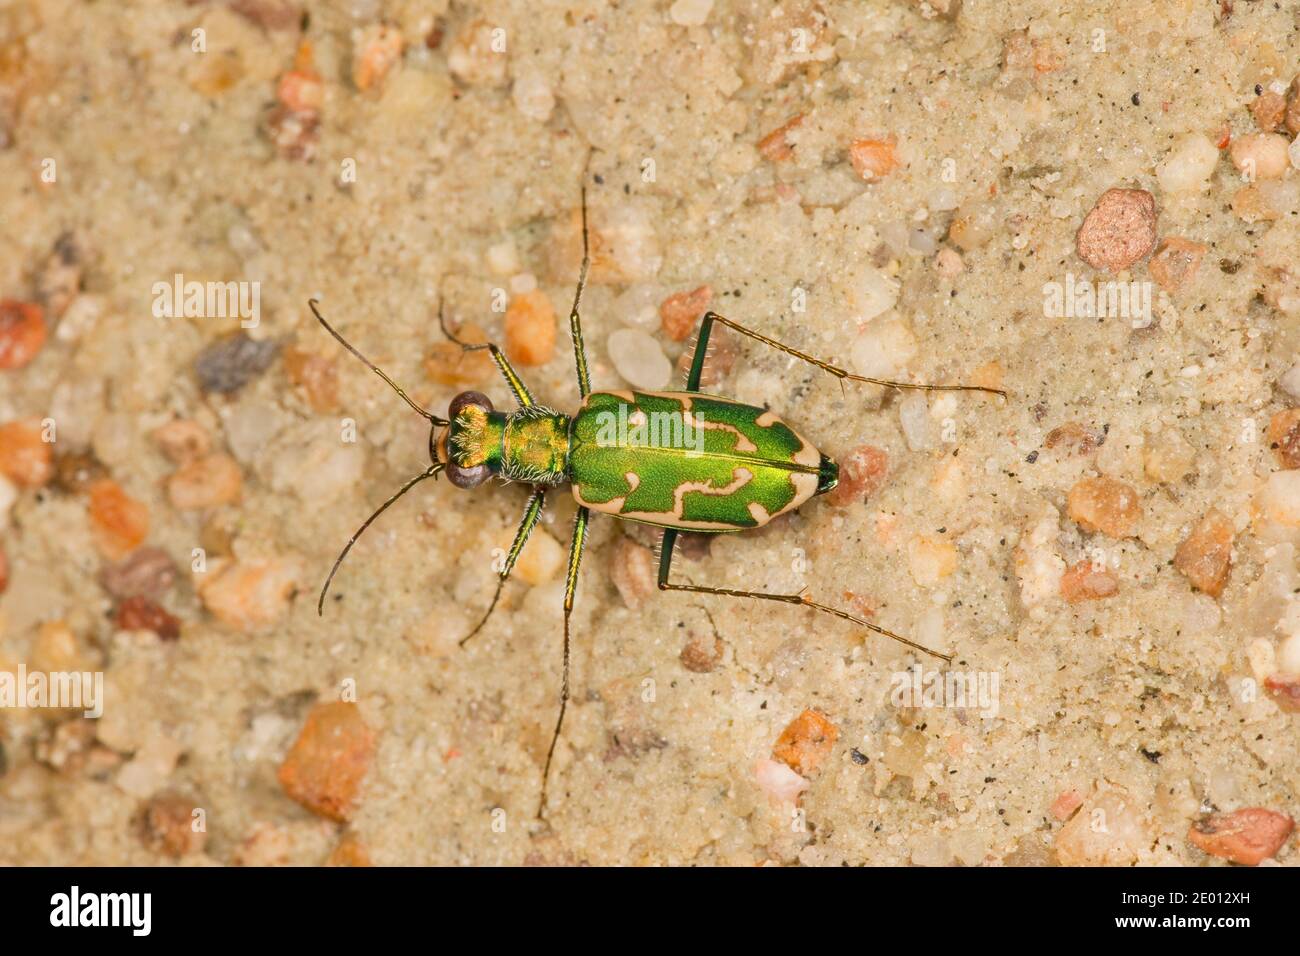 Aridland Tiger Beetle, Ellipsoptera marutha, Cicindelinae, Carabidae. Length 13.5 mm. Green morph. Stock Photo